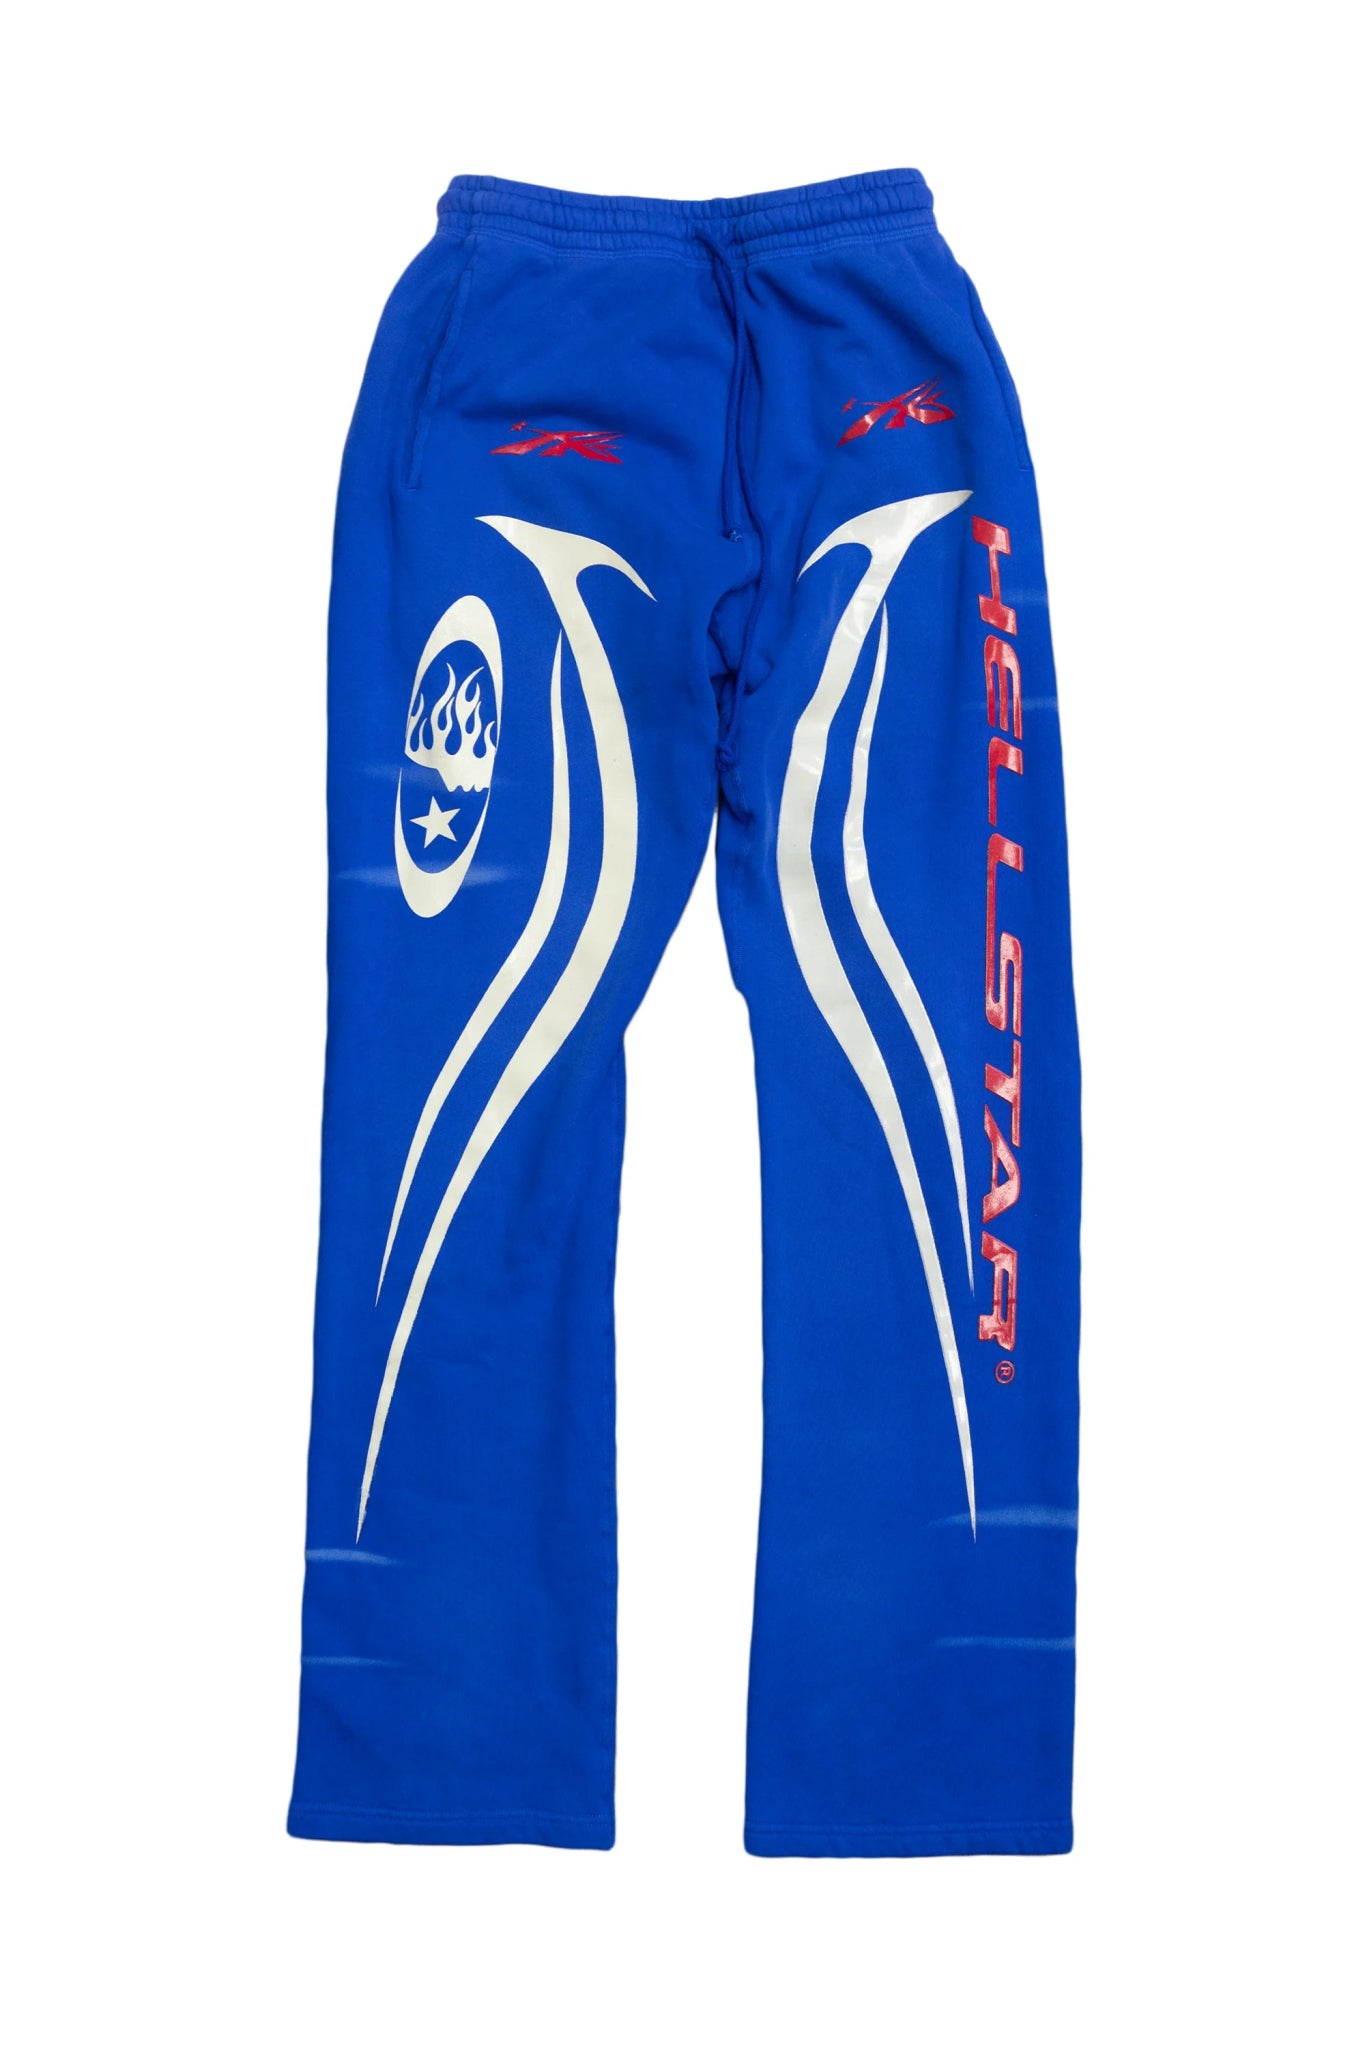 Hellstar Sports Sweatpants (Blue) - Supra Sneakers